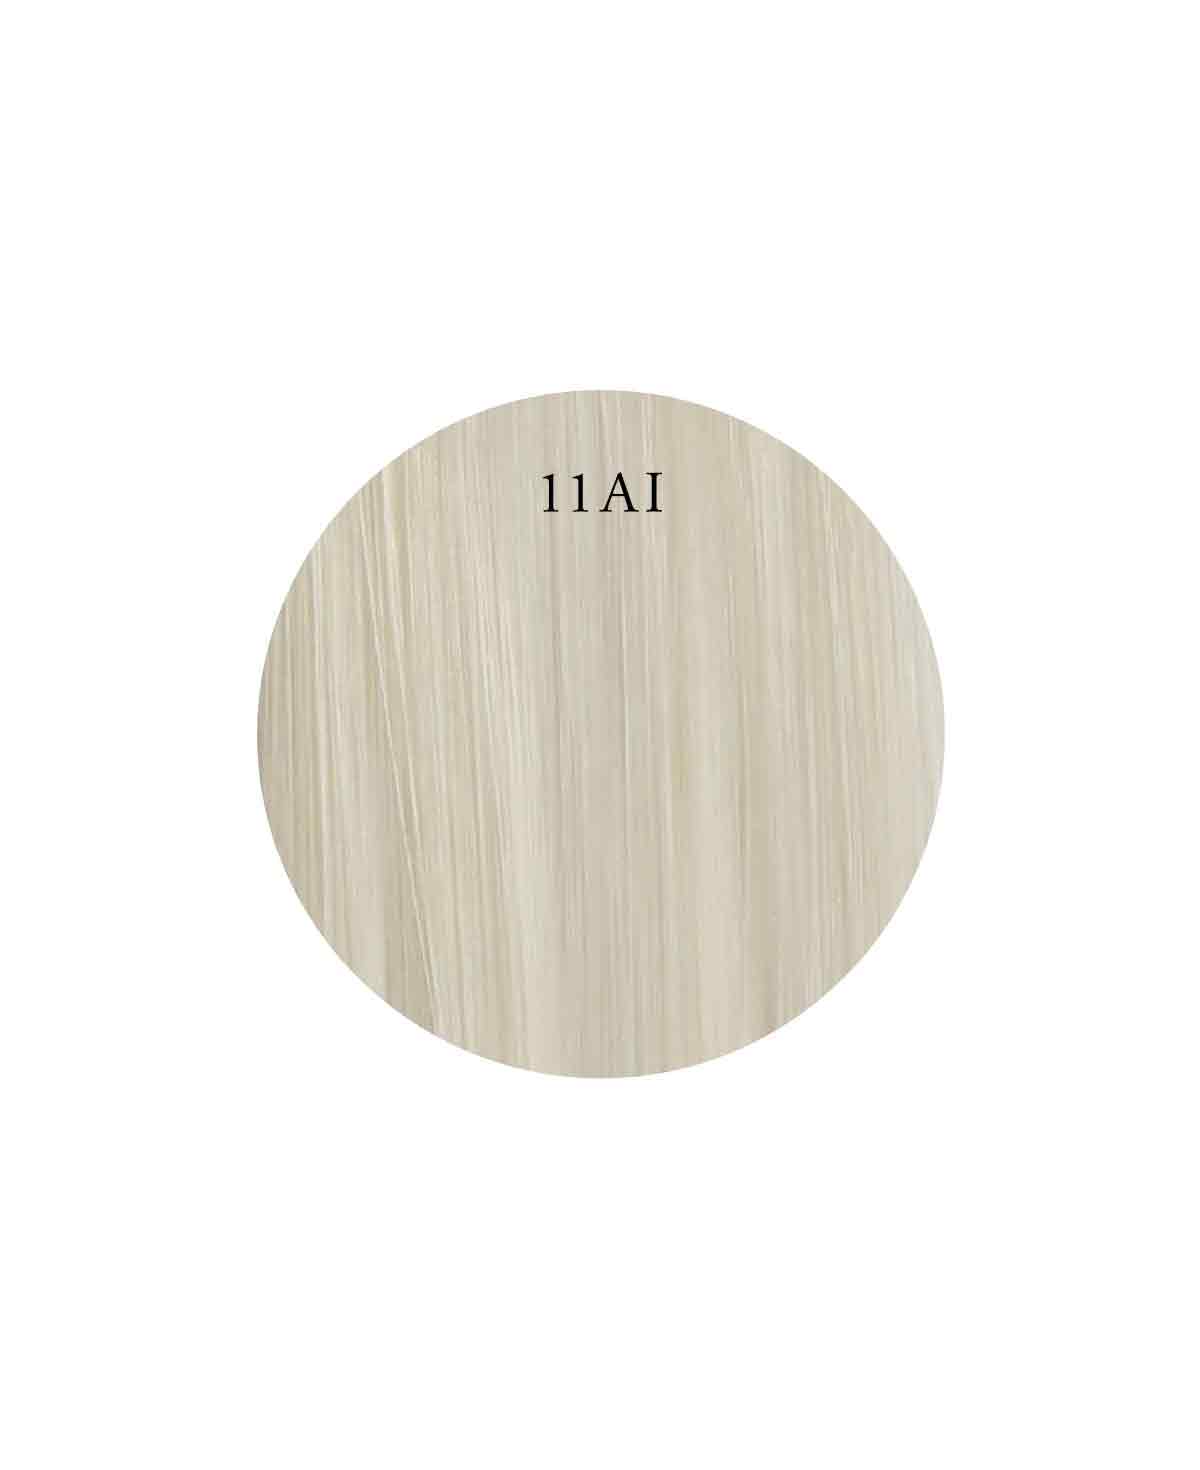 Showpony 45-50cm (20") HALO - 3 in 1 BOX SET - 11AI White Blonde 